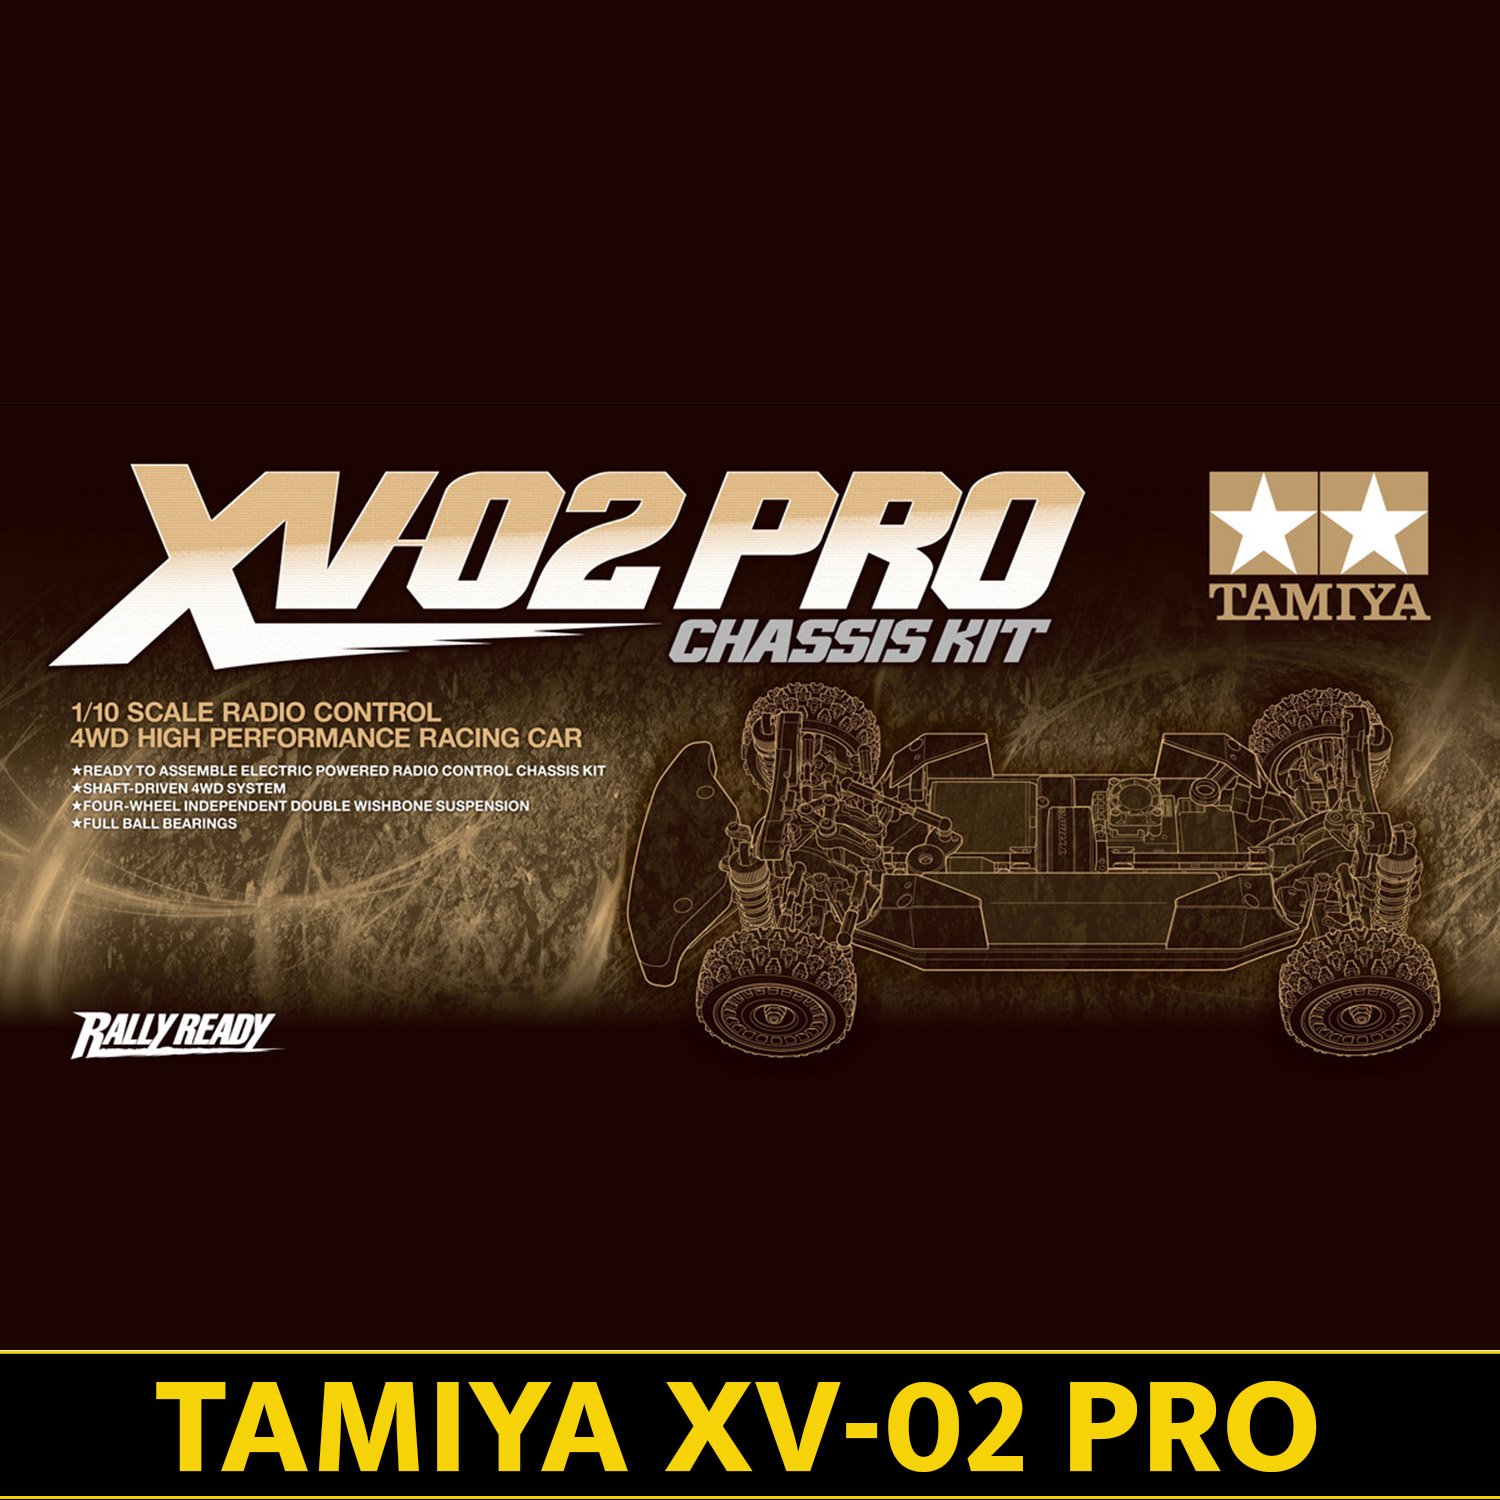 Tamiya XV-02 PRO Chassis Kit